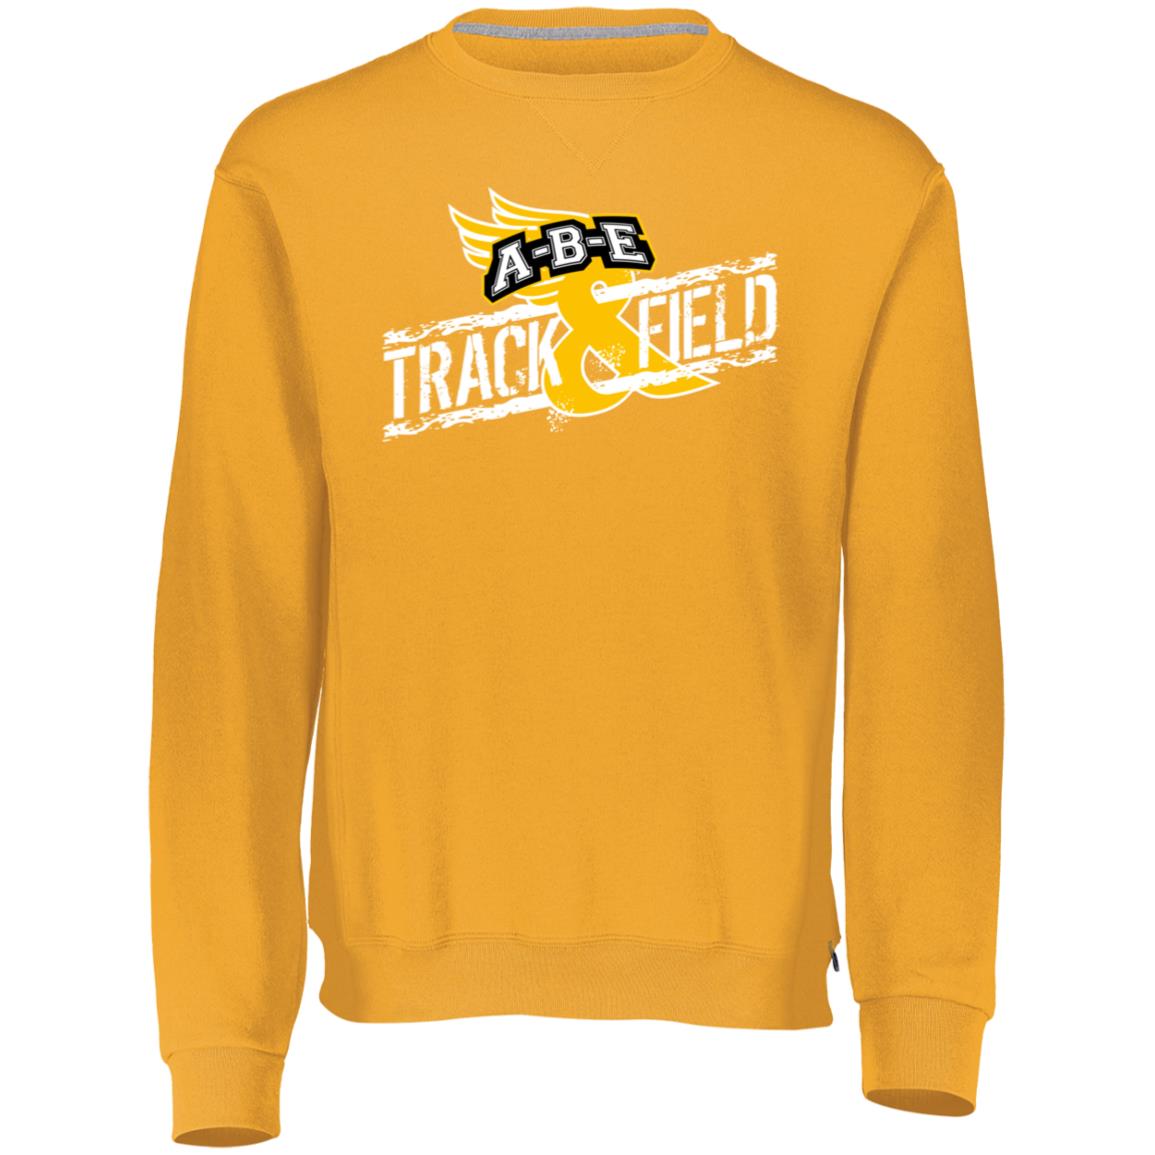 A-B-E Track & Field - Dri-Power Fleece Crewneck Sweatshirt